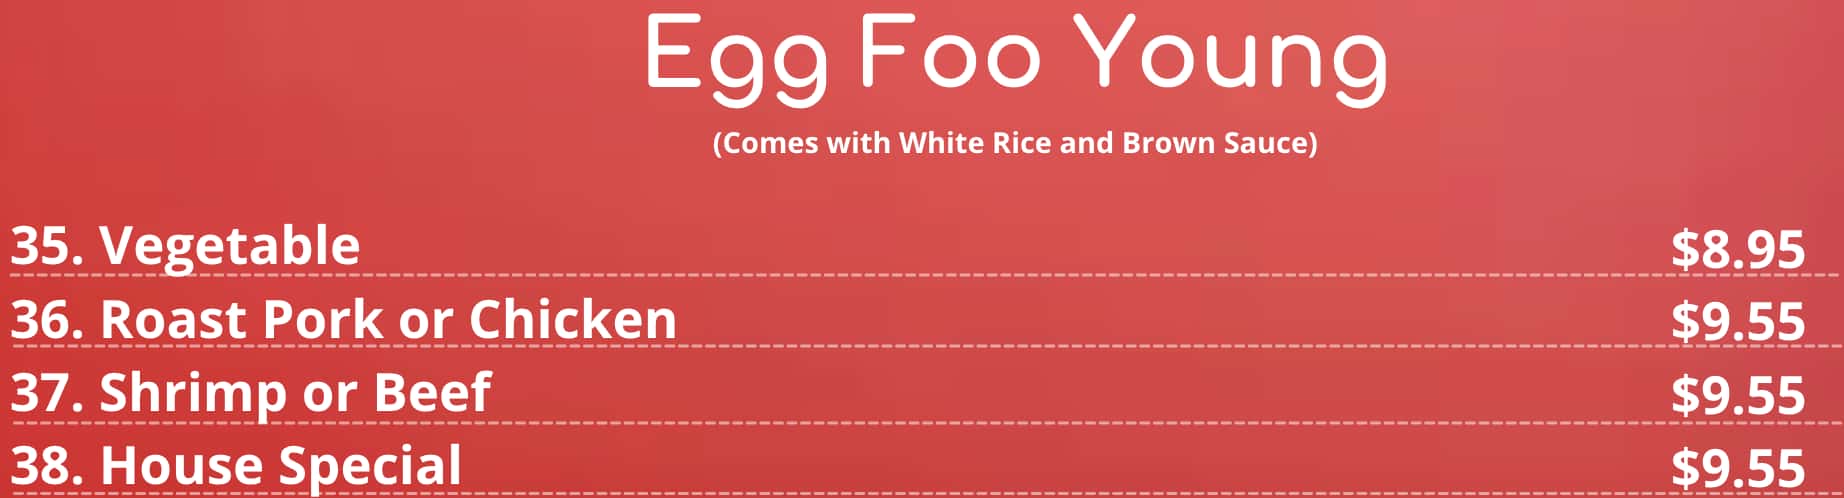 Yums Chinese Food Egg Foo Young Menu